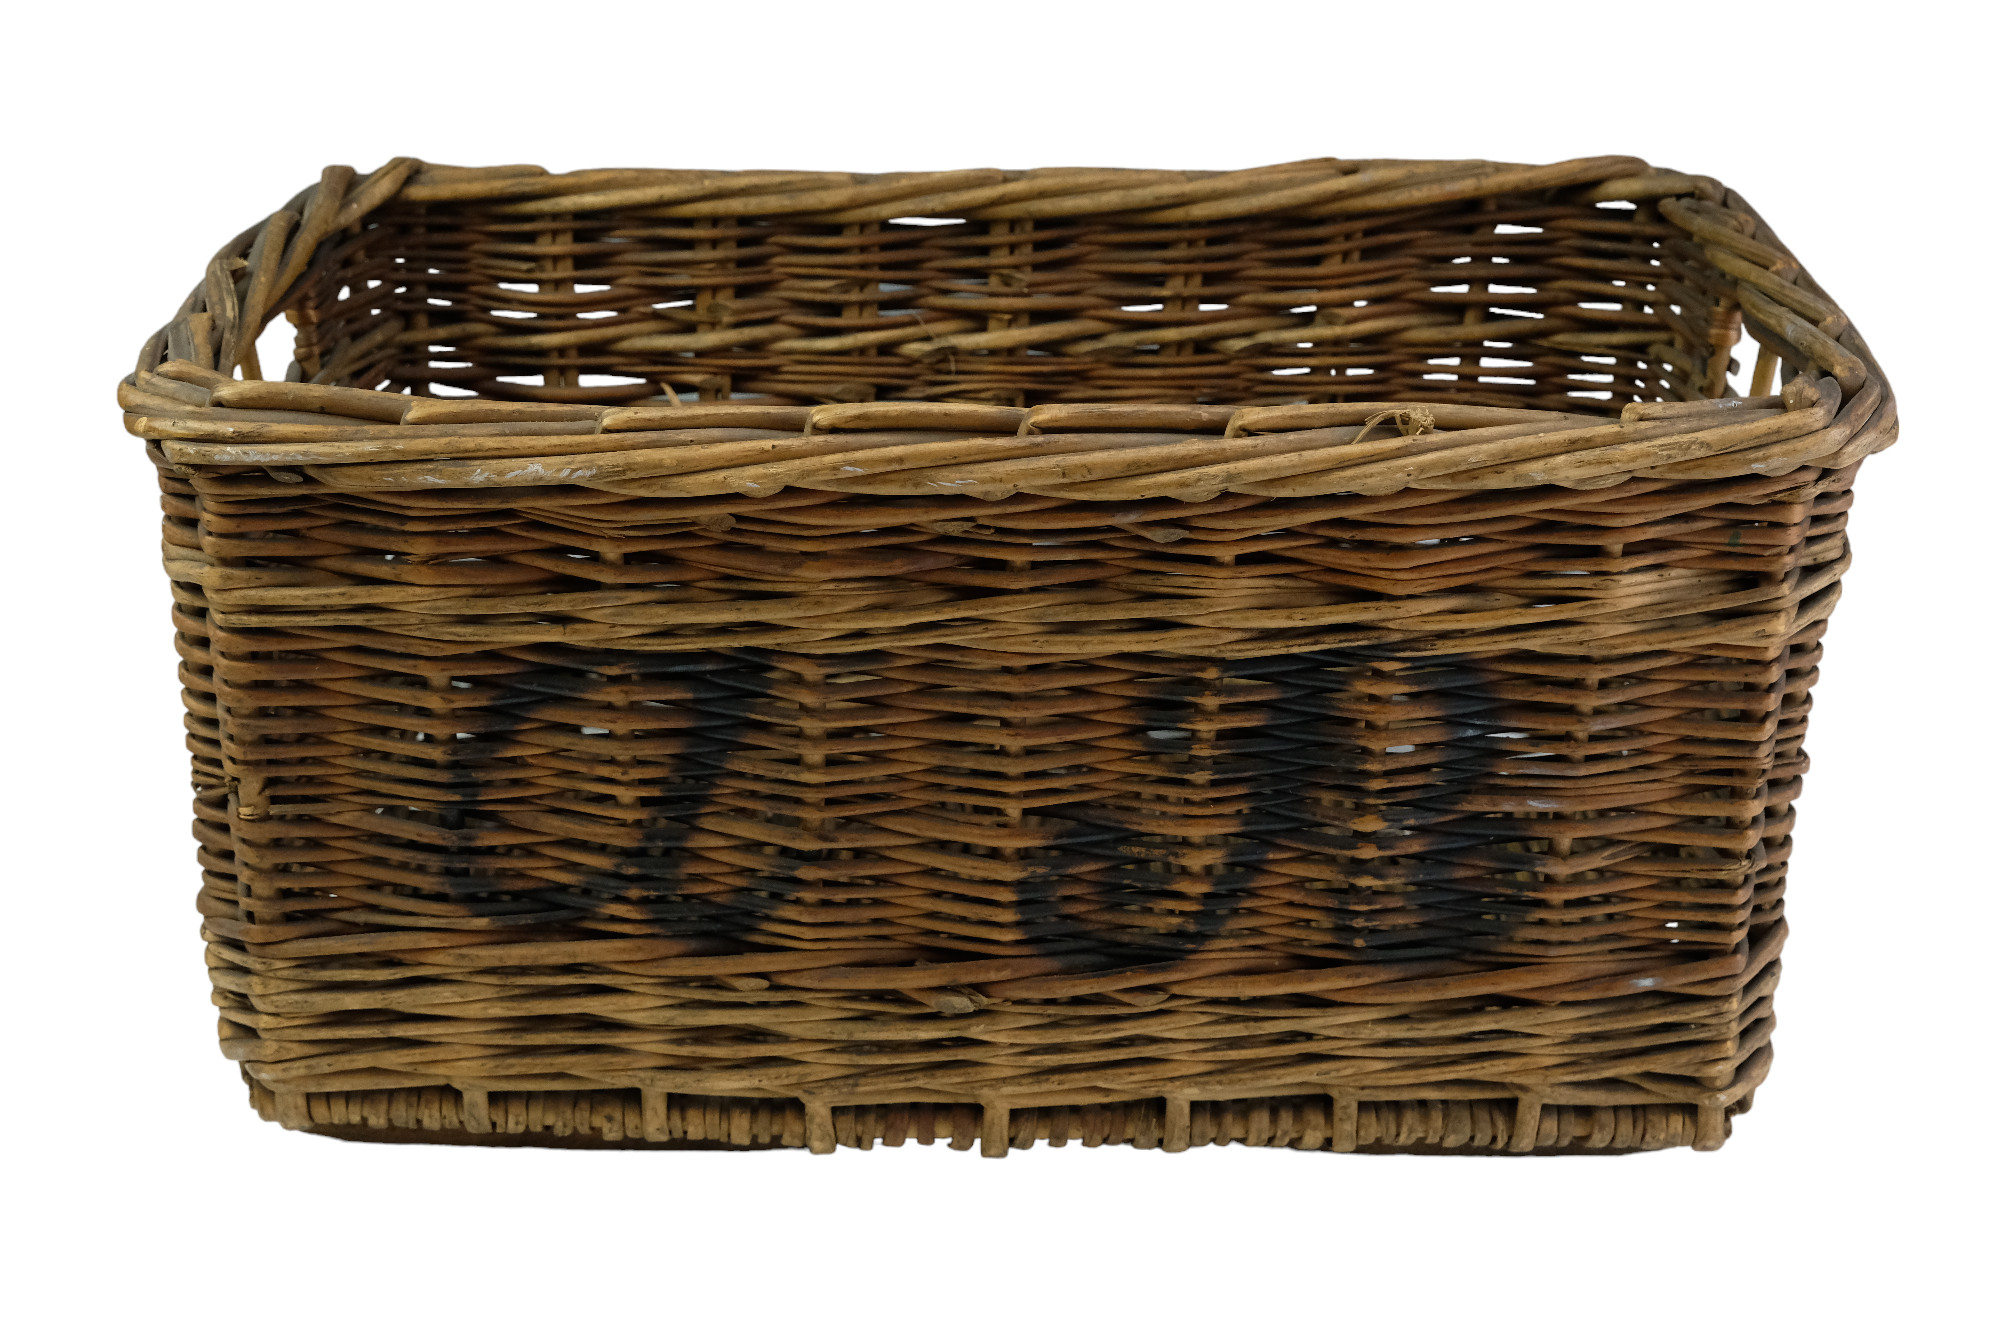 A vintage wicket bottle or similar basket, marked "a R", 50 cm x 28 cm x 25 cm - Image 2 of 2